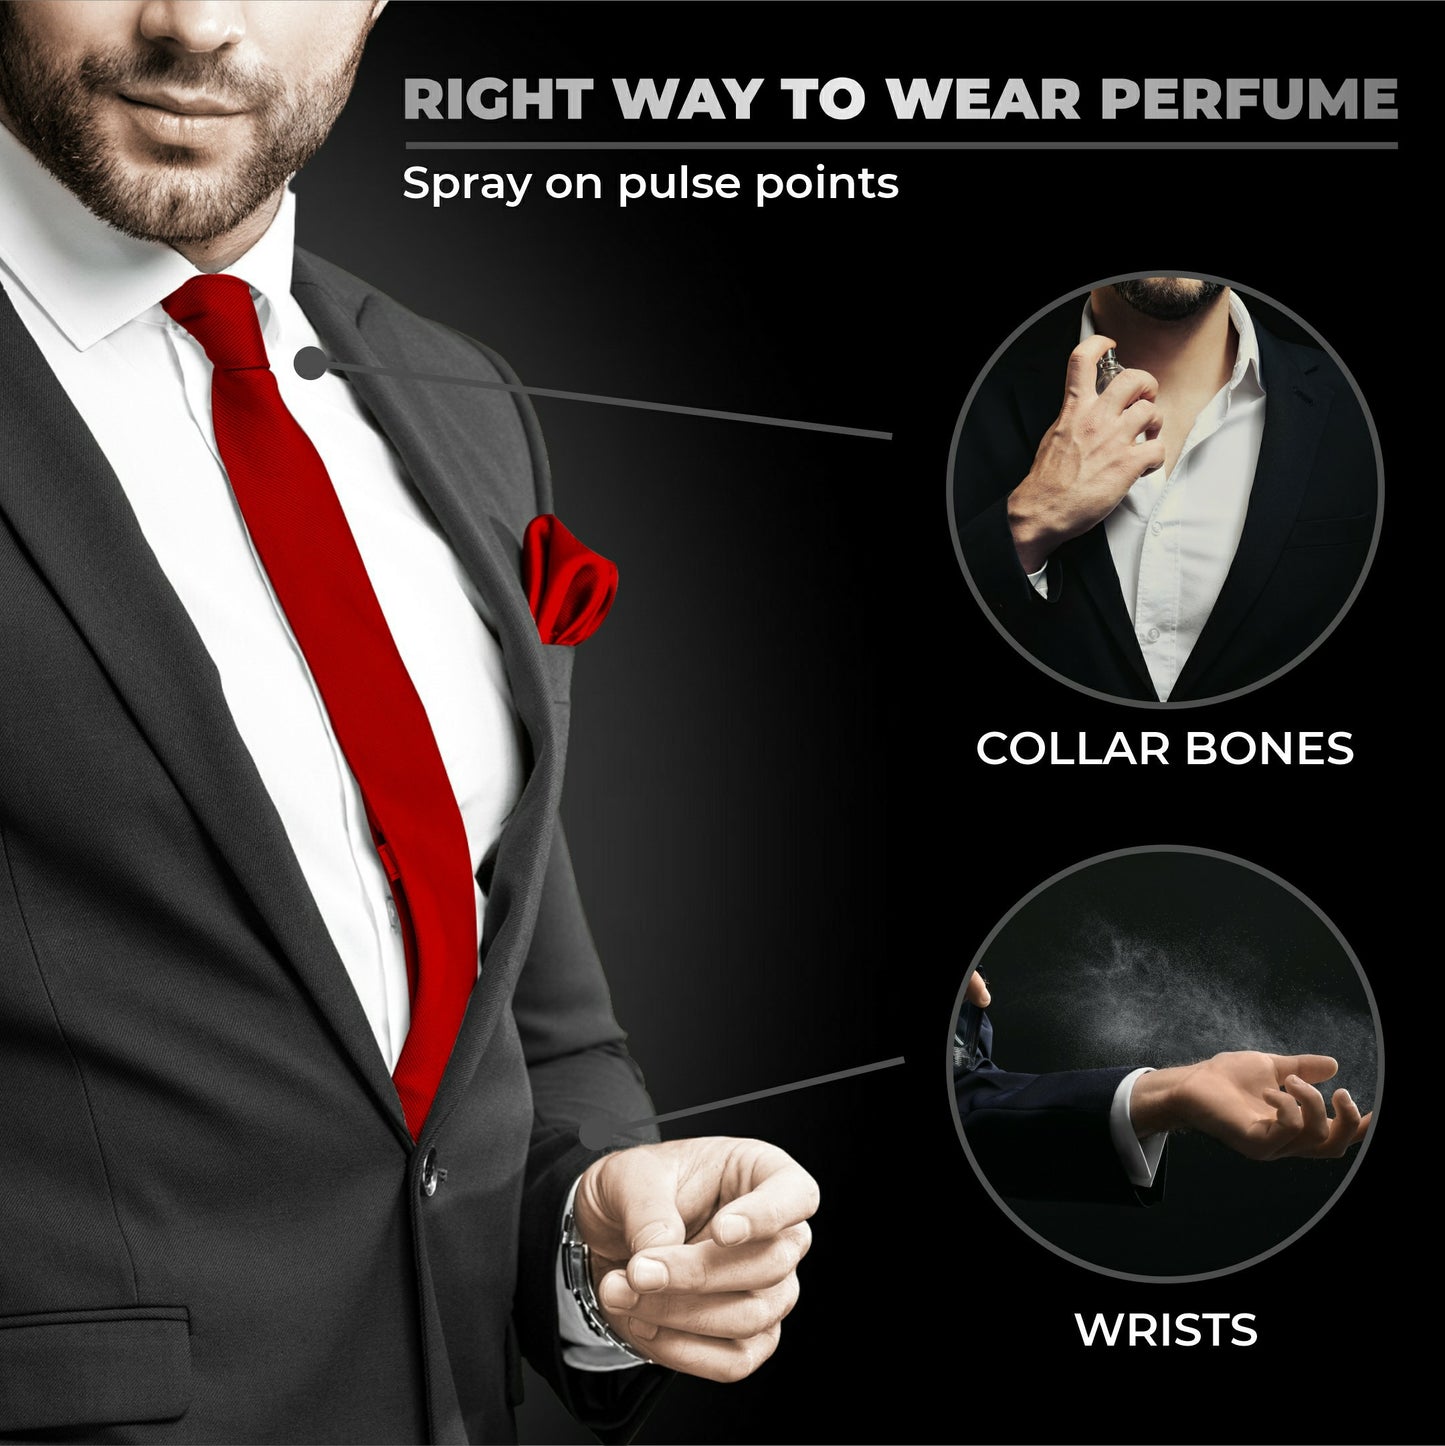 right way to wear perfume, spray on pulse points, collar bones, wrists